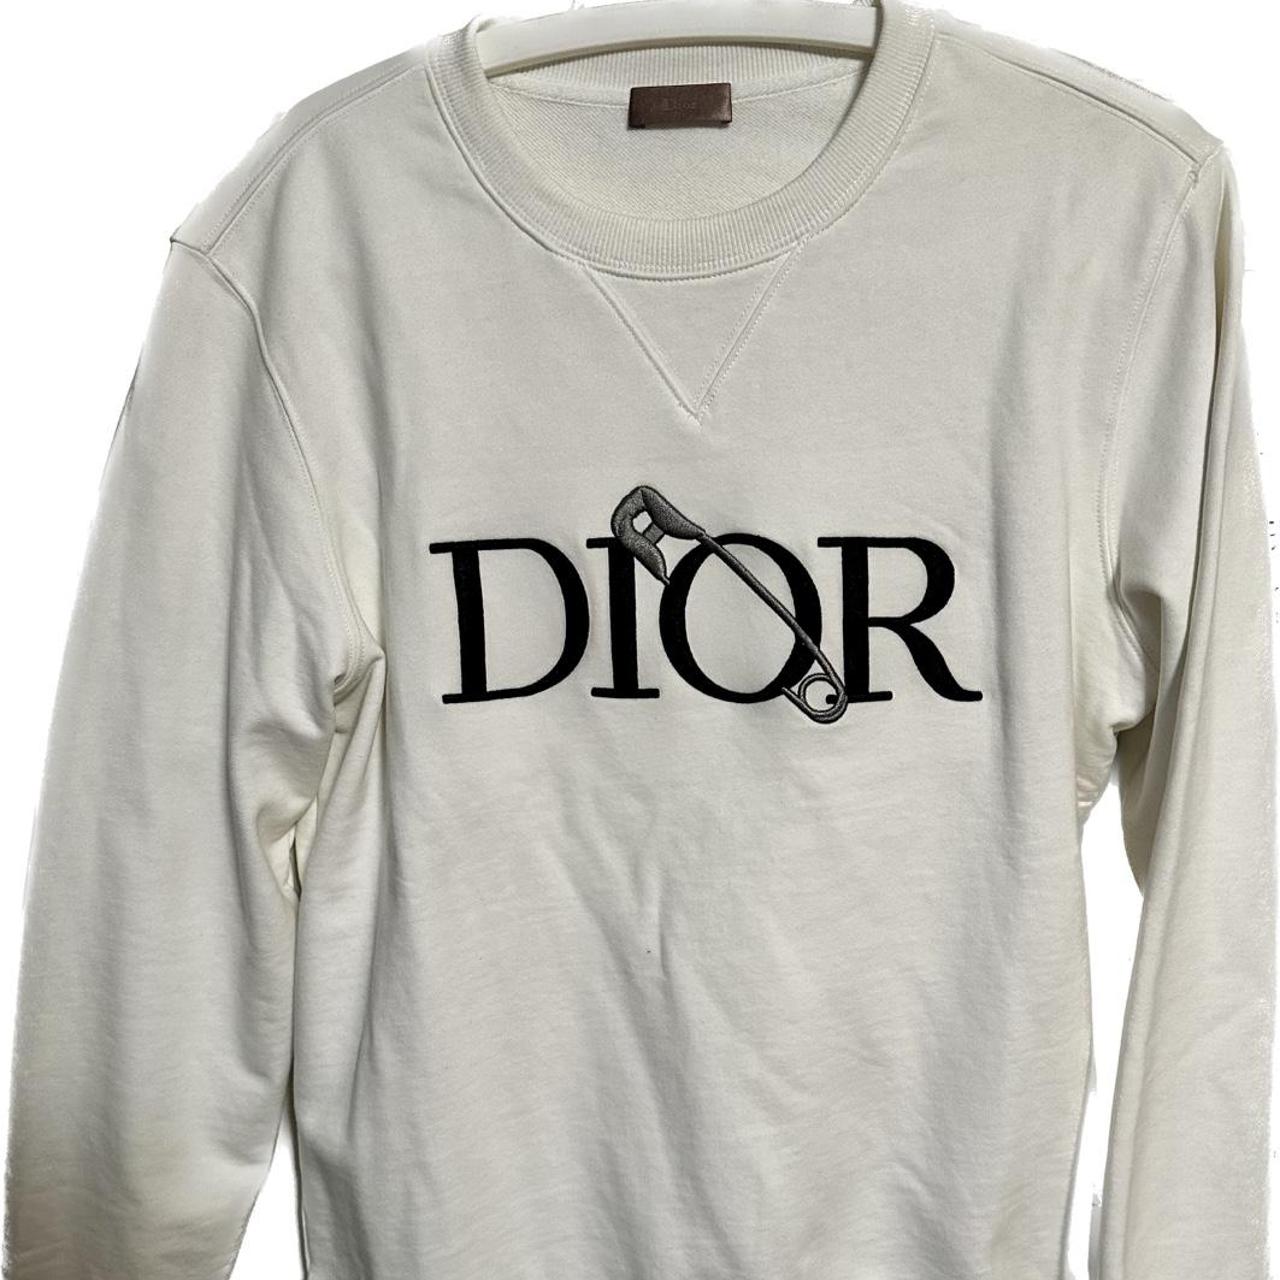 Dior Men's White and Black Jumper